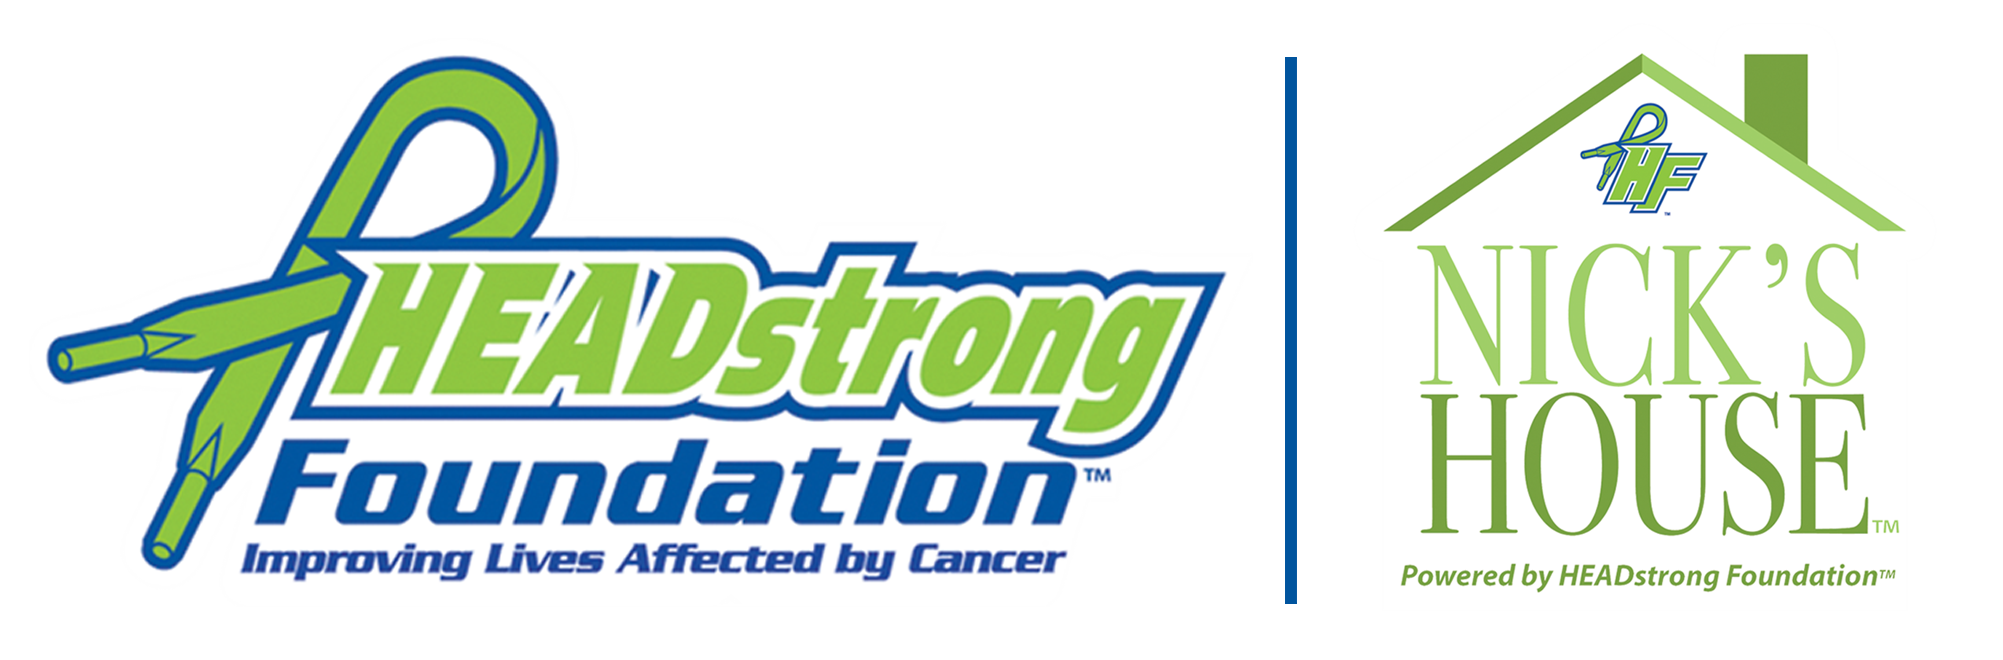 headstrong foundation logo